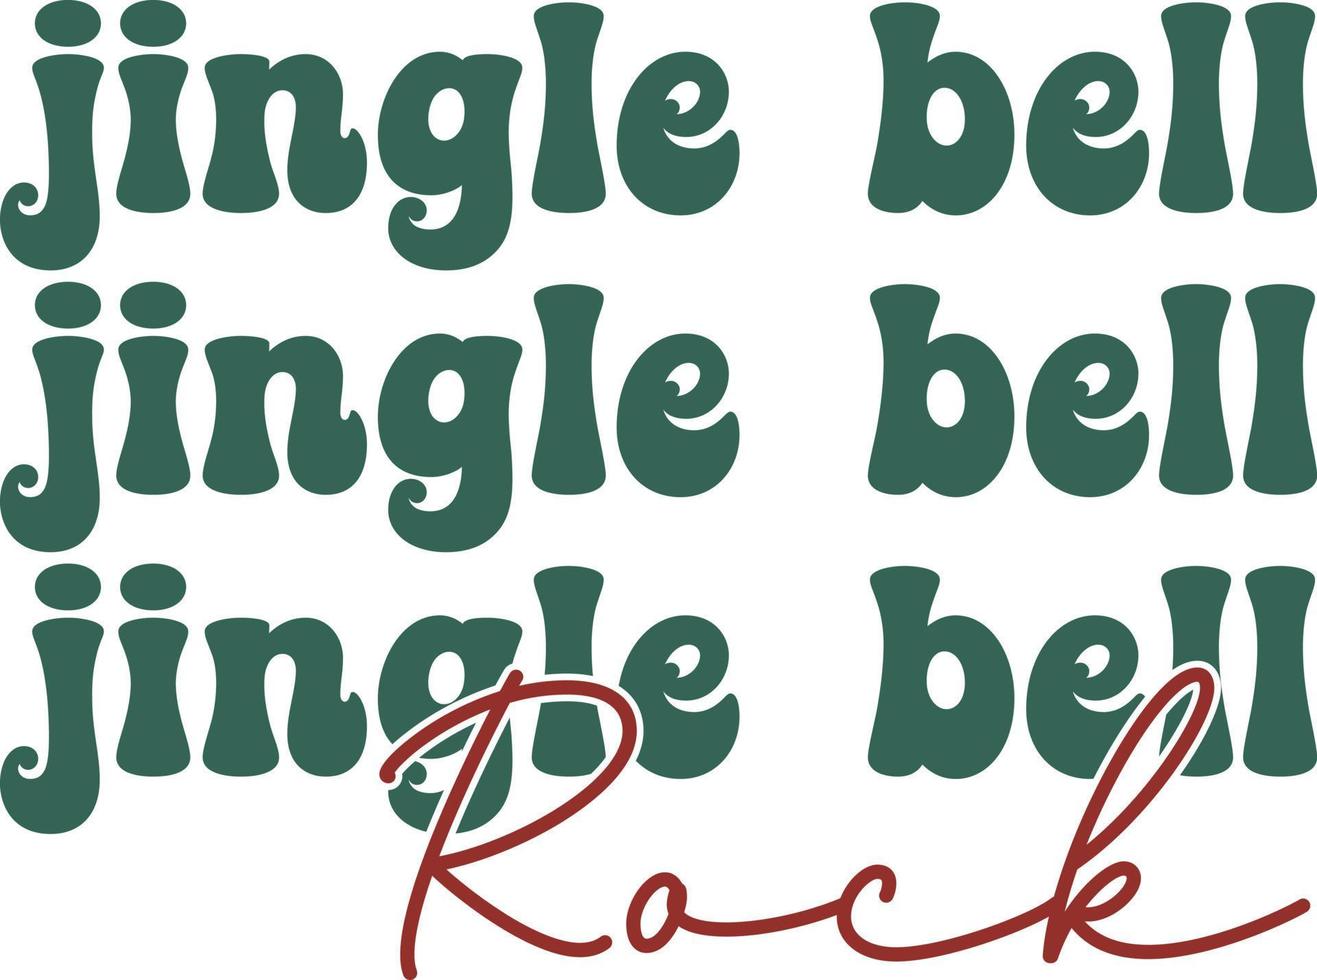 jingle bell rock, feliz natal, papai noel, feriado de natal, arquivo de ilustração vetorial vetor